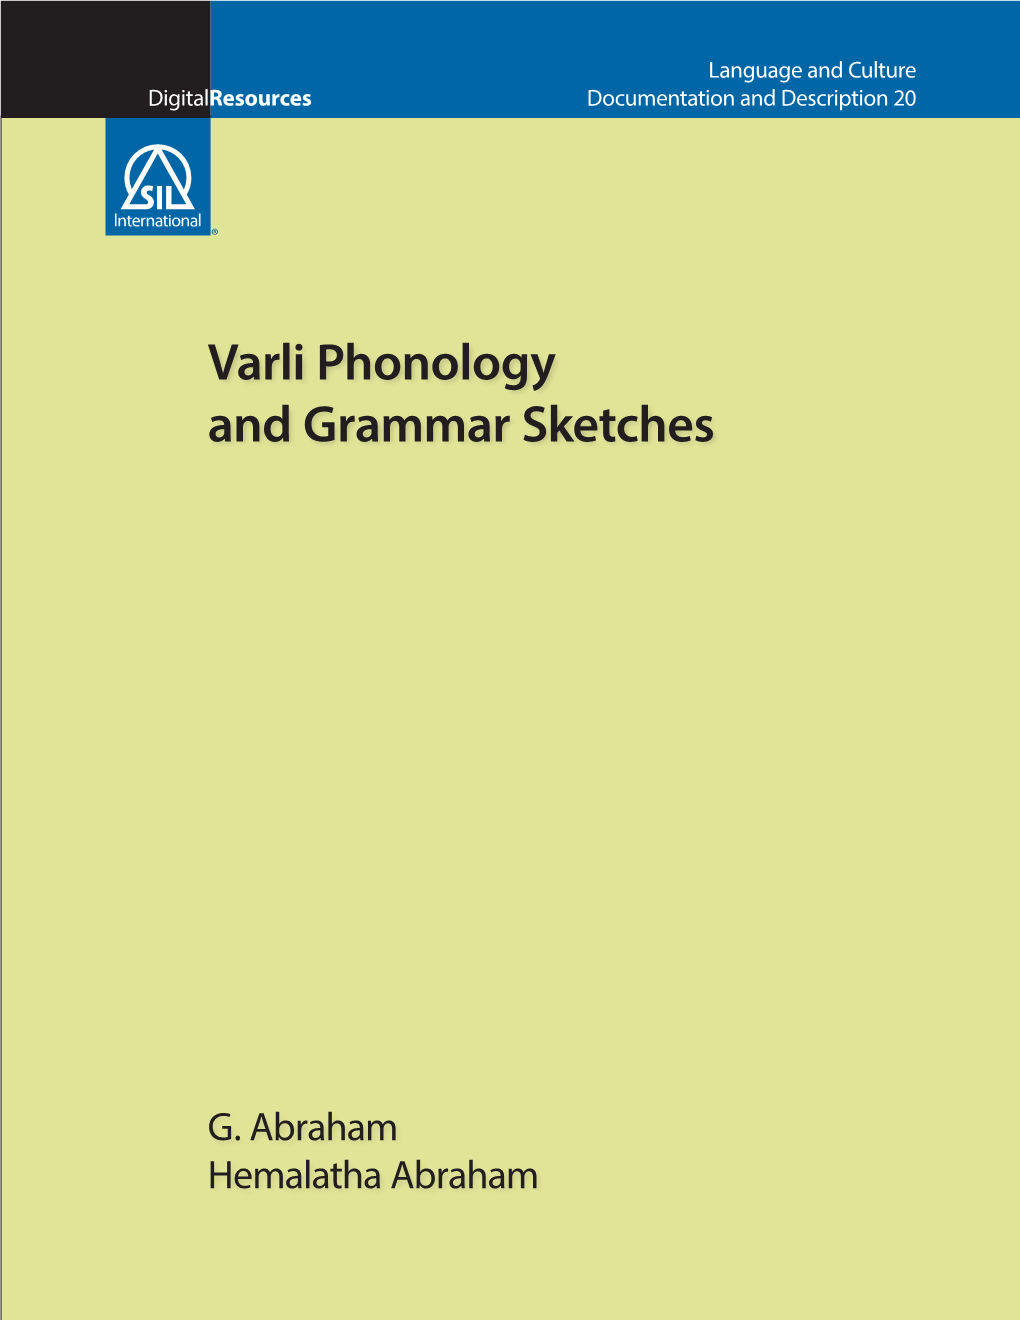 Varli Phonological and Grammar